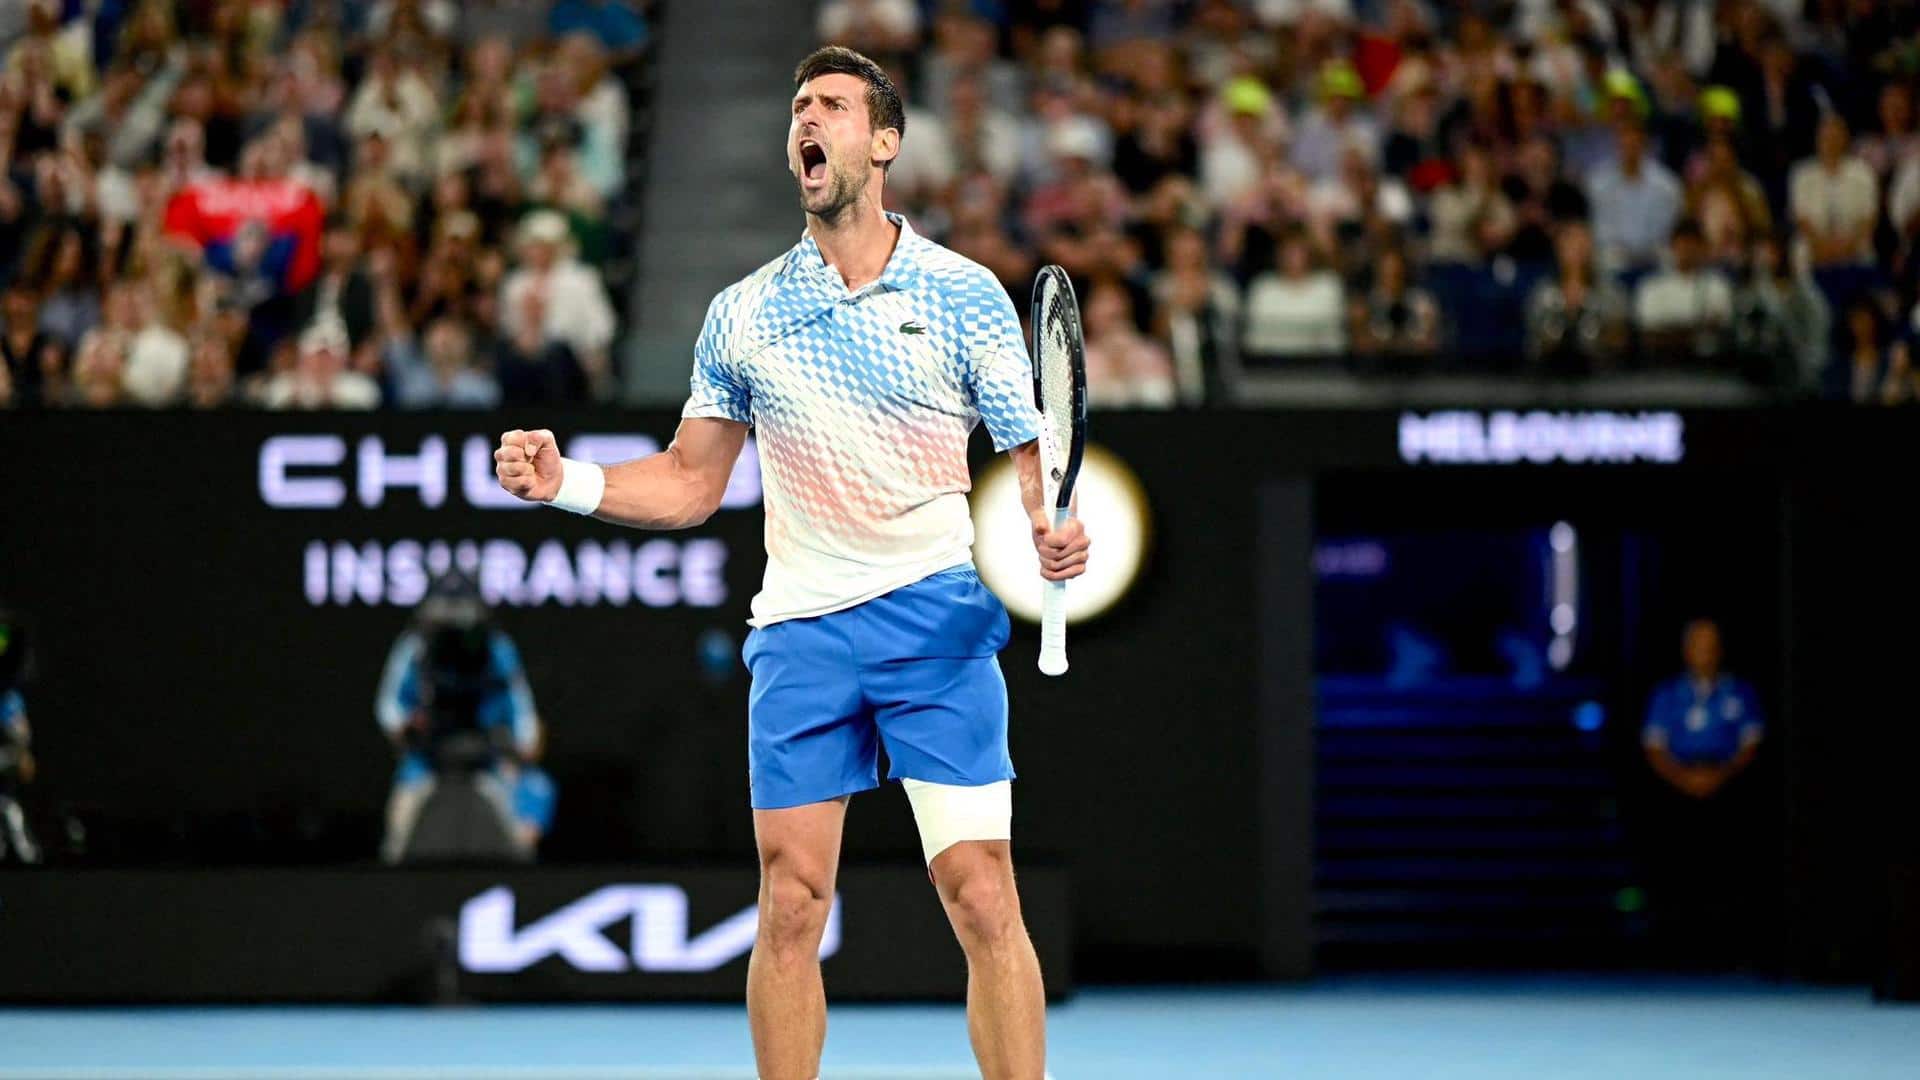 Novak Djokovic breaks this massive Steffi Graf record: Details here